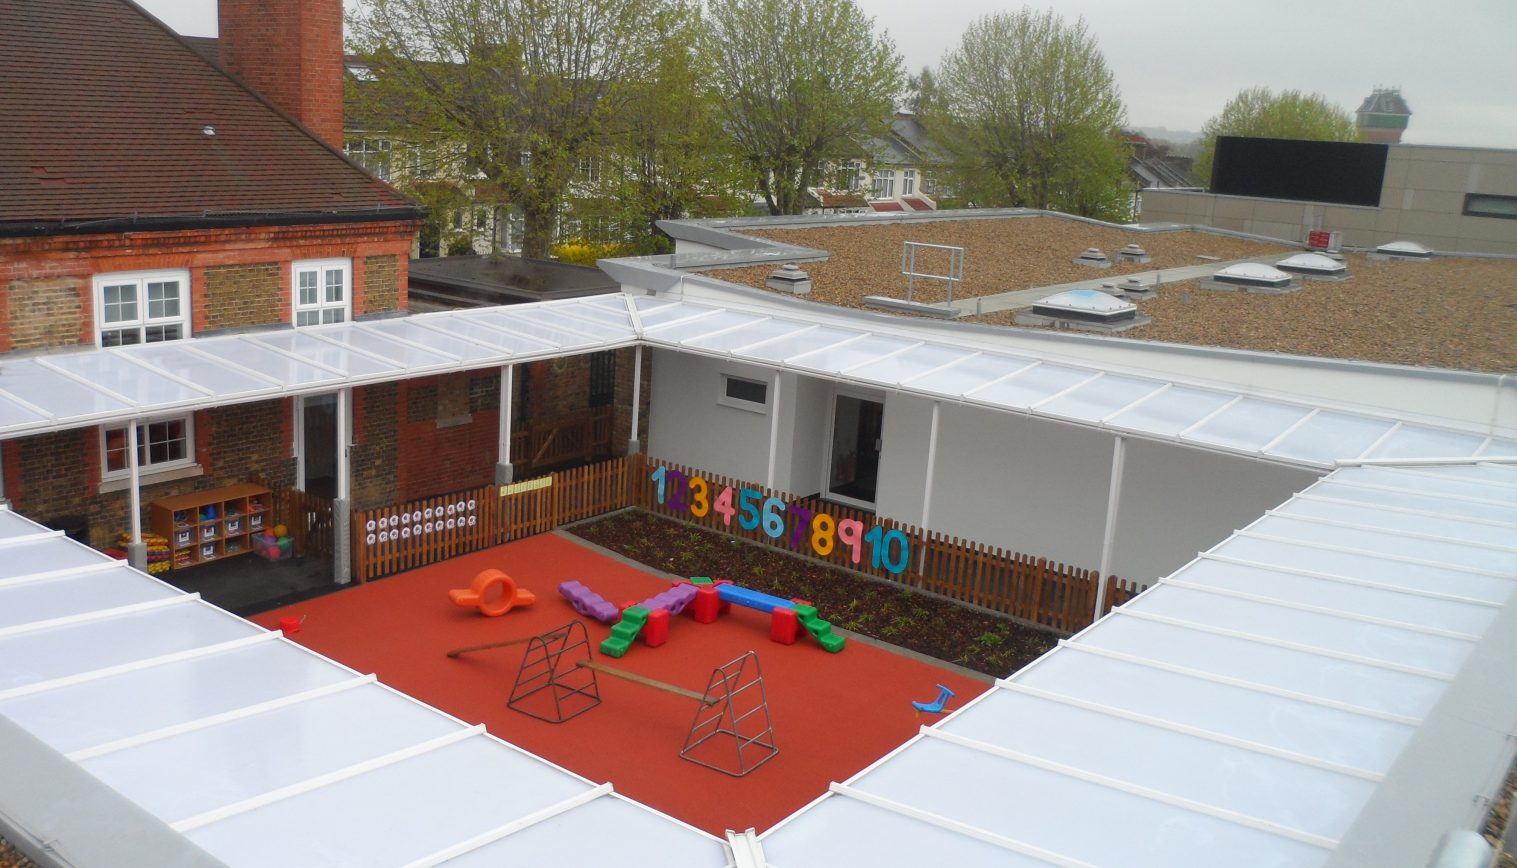 Gordonbrock Primary School – 2nd Wall Mounted Canopy